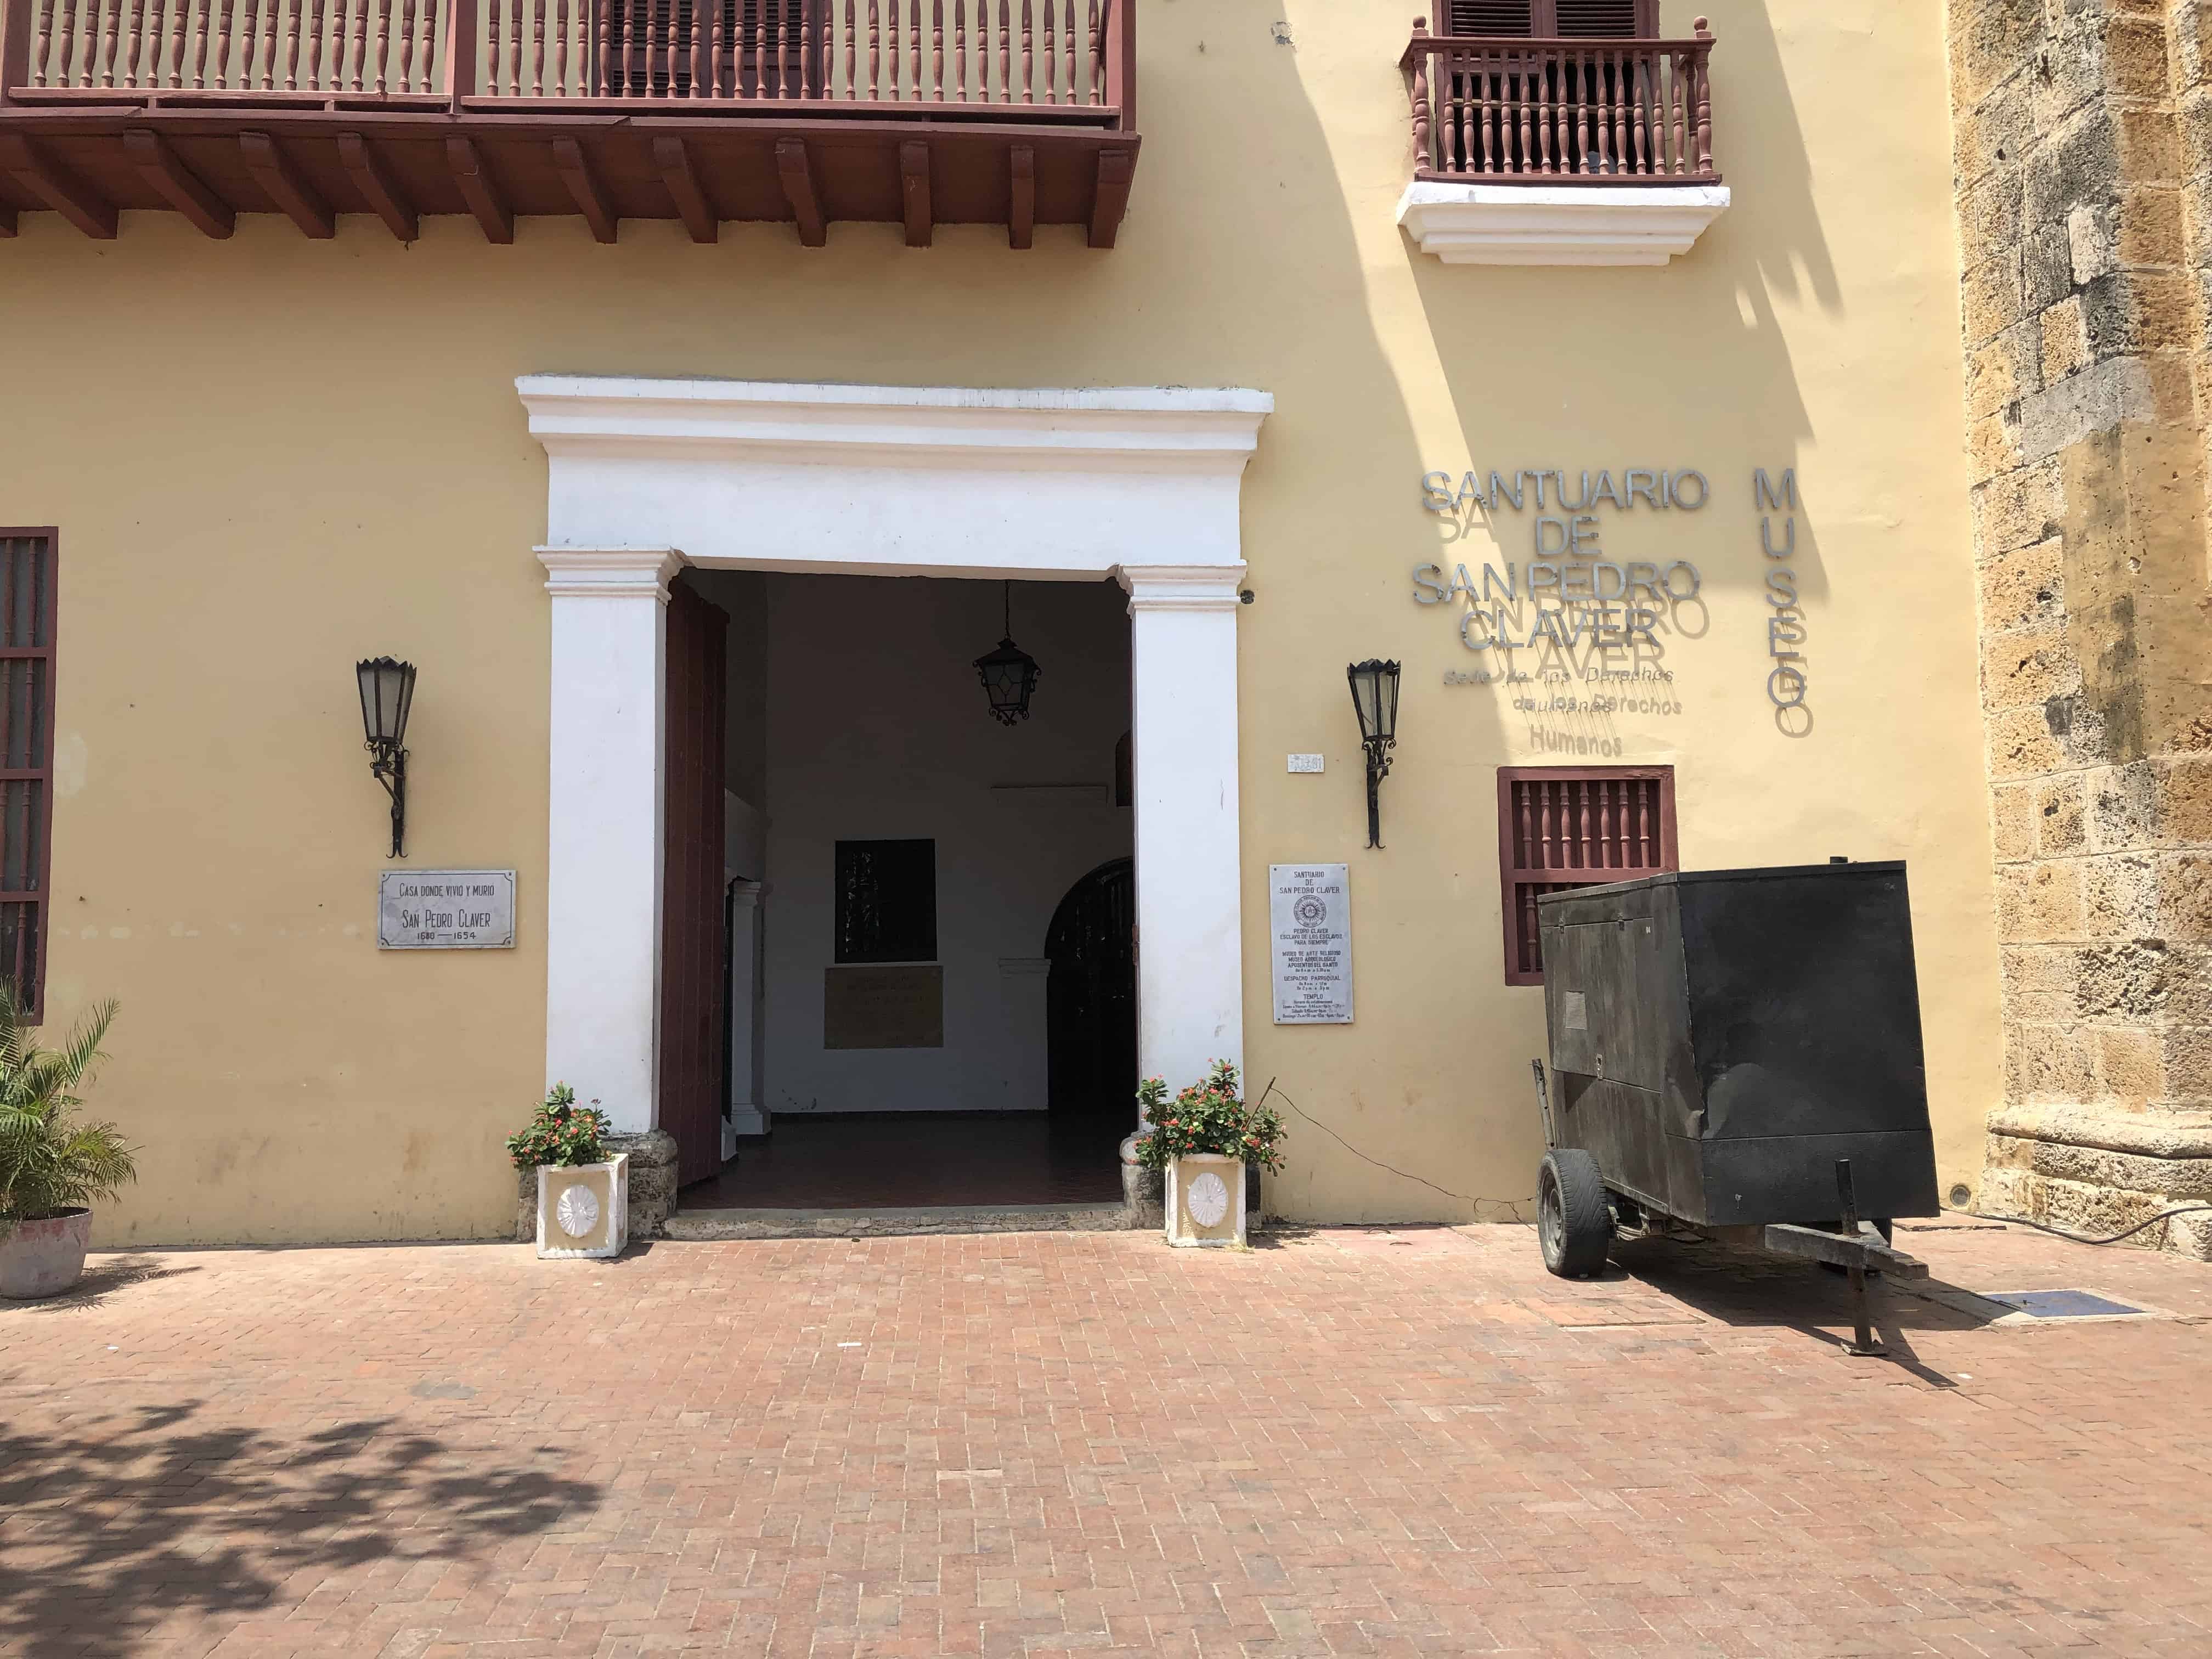 Sanctuary of San Pedro Claver Museum in Cartagena, Colombia